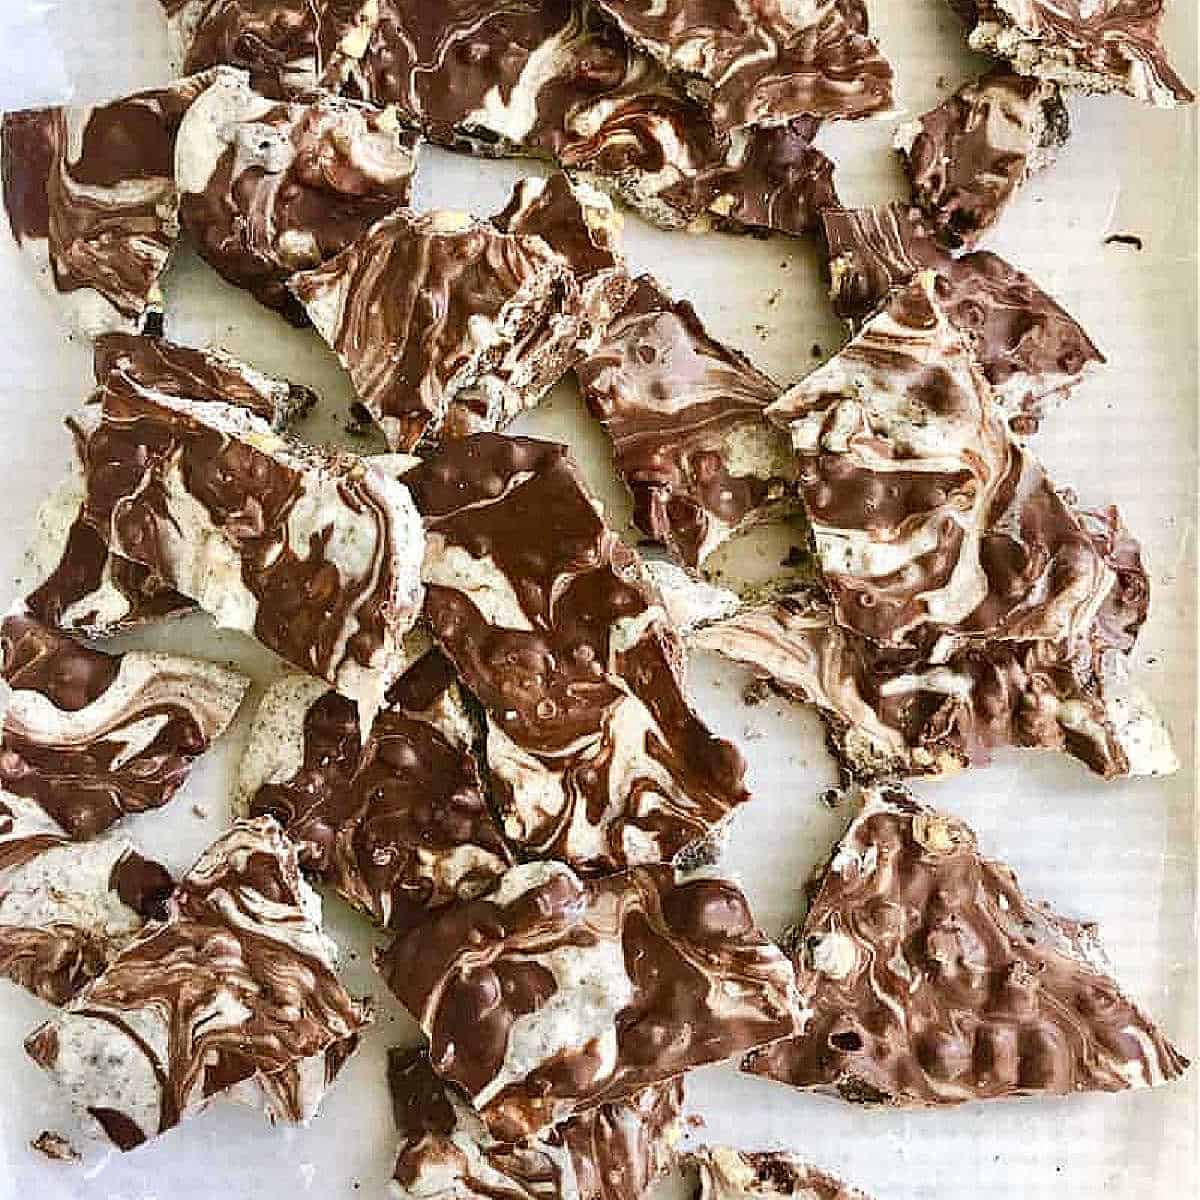 https://vintagekitchennotes.com/wp-content/uploads/2019/10/Double-chocolate-cookie-bark-pieces.jpeg